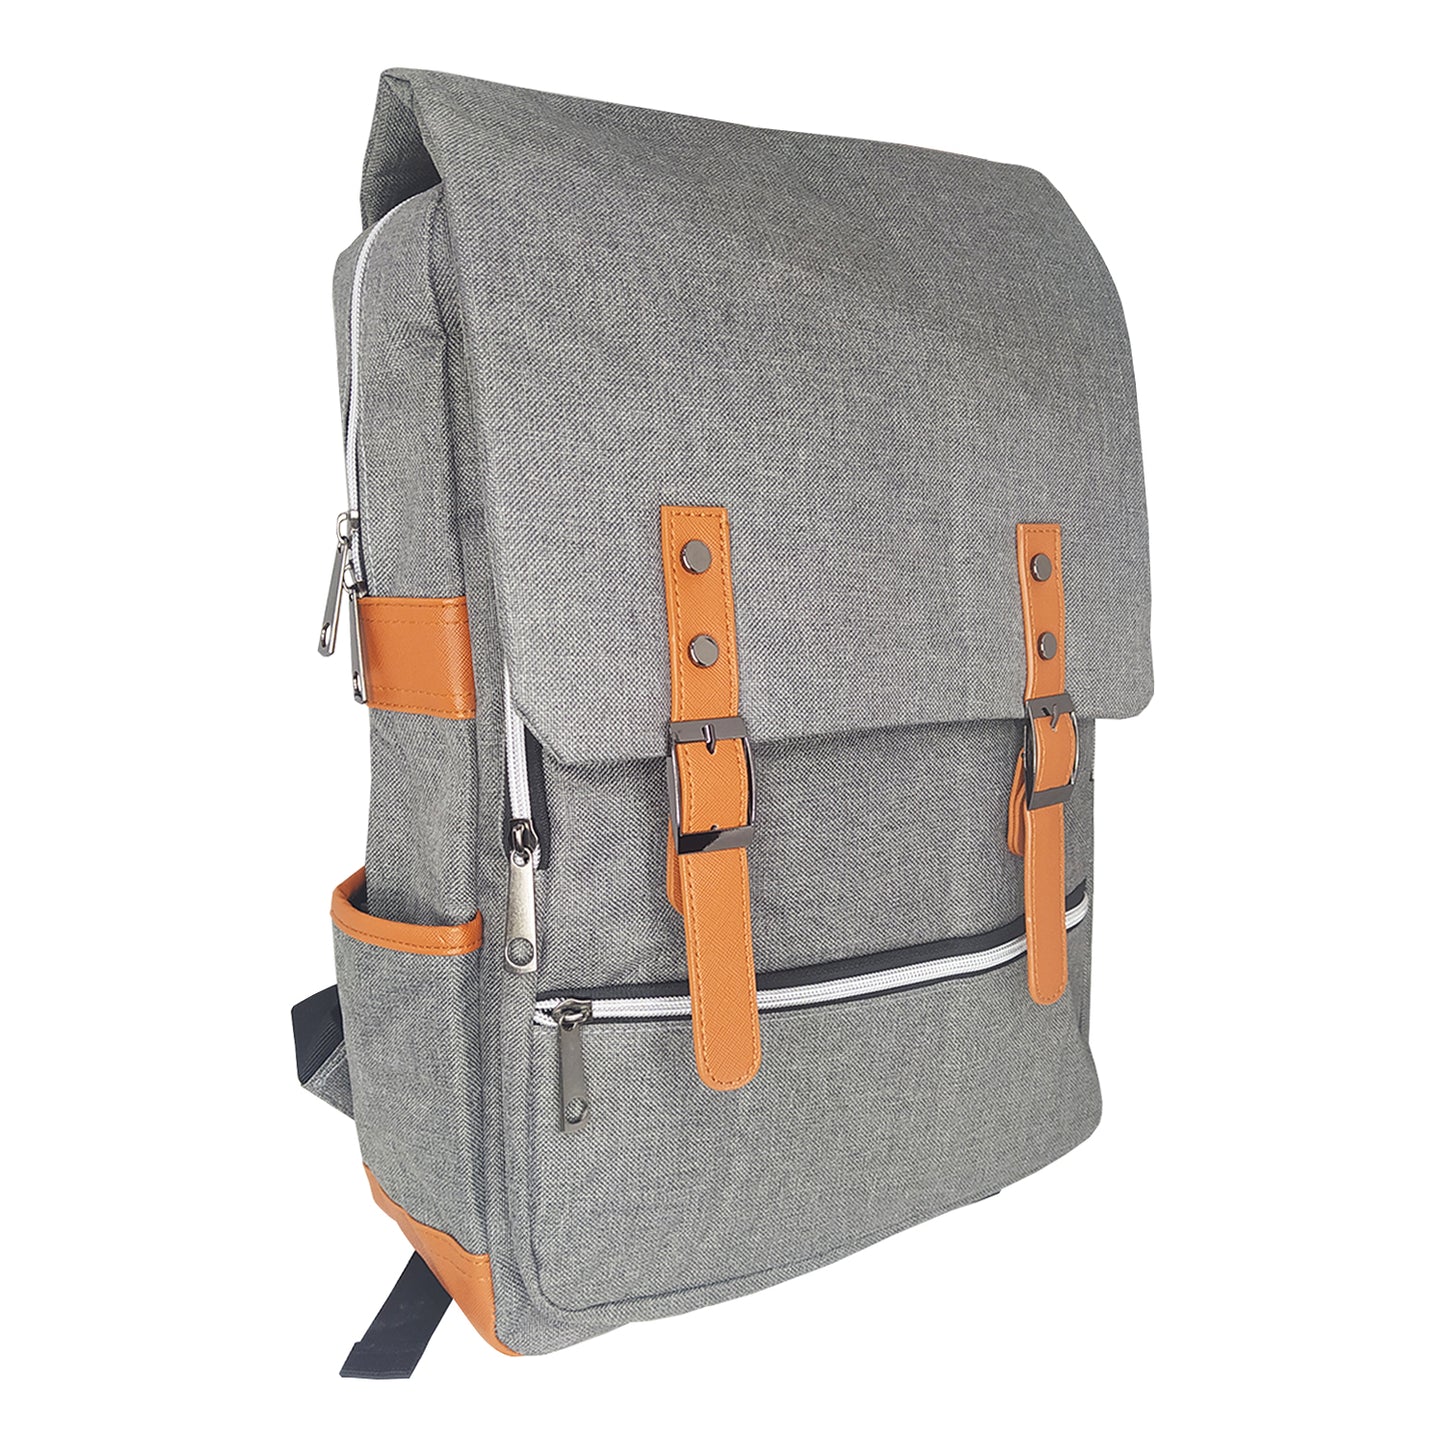 Backpack Gray 2233 GRAY